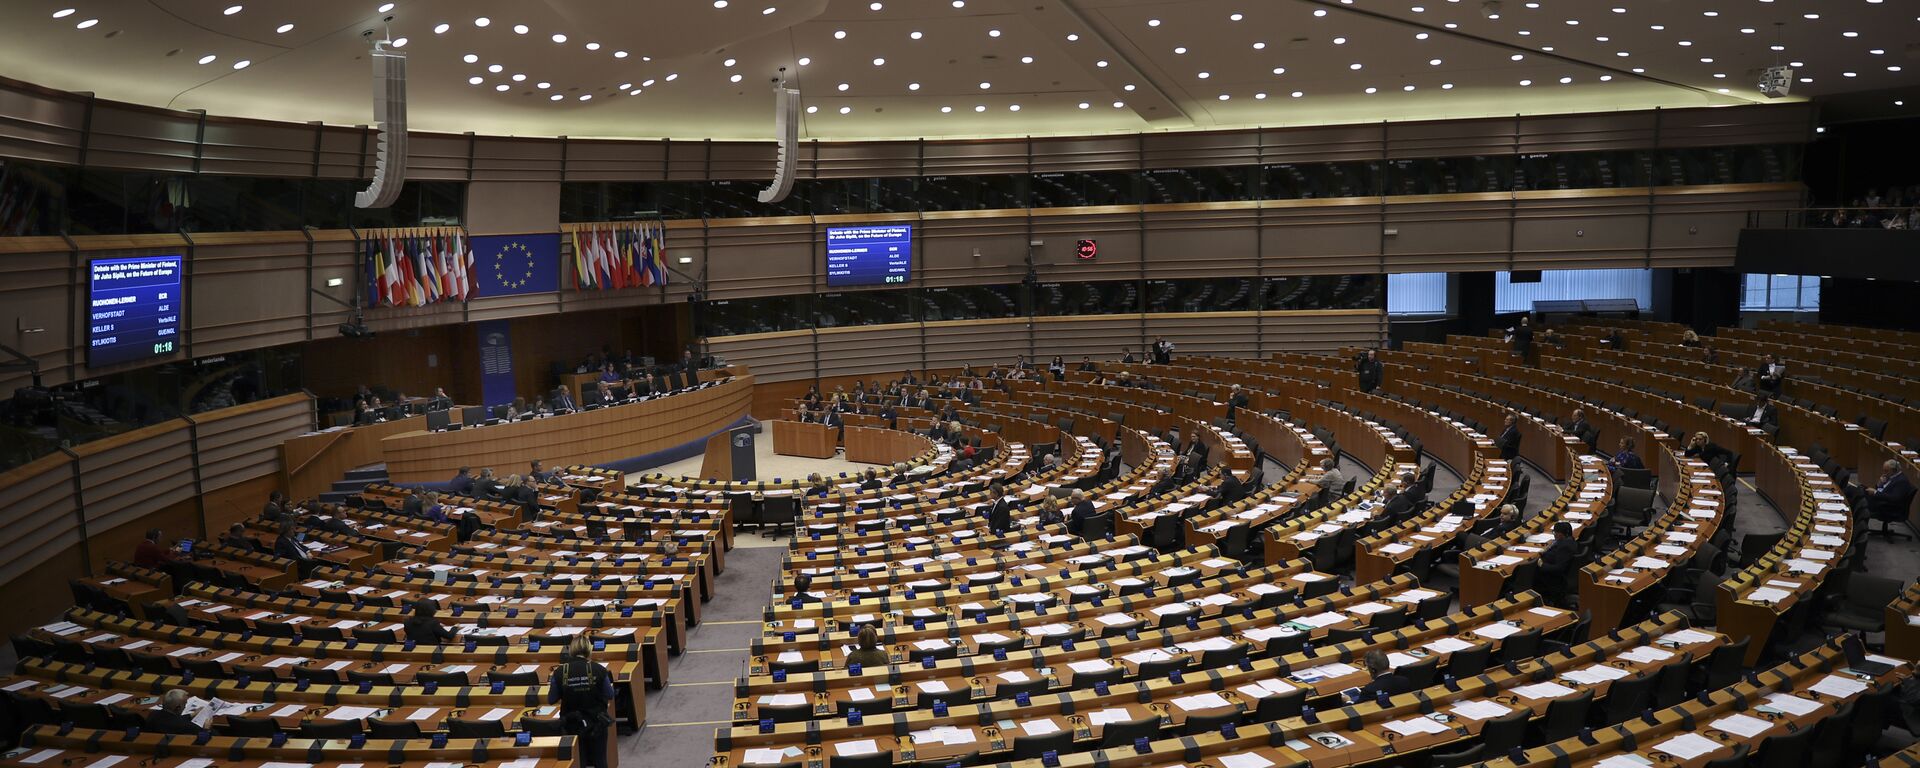 European Parliament members attend a plenary session at the European Parliament in Brussels, Thursday, Jan. 31, 2019 - Sputnik International, 1920, 29.03.2019